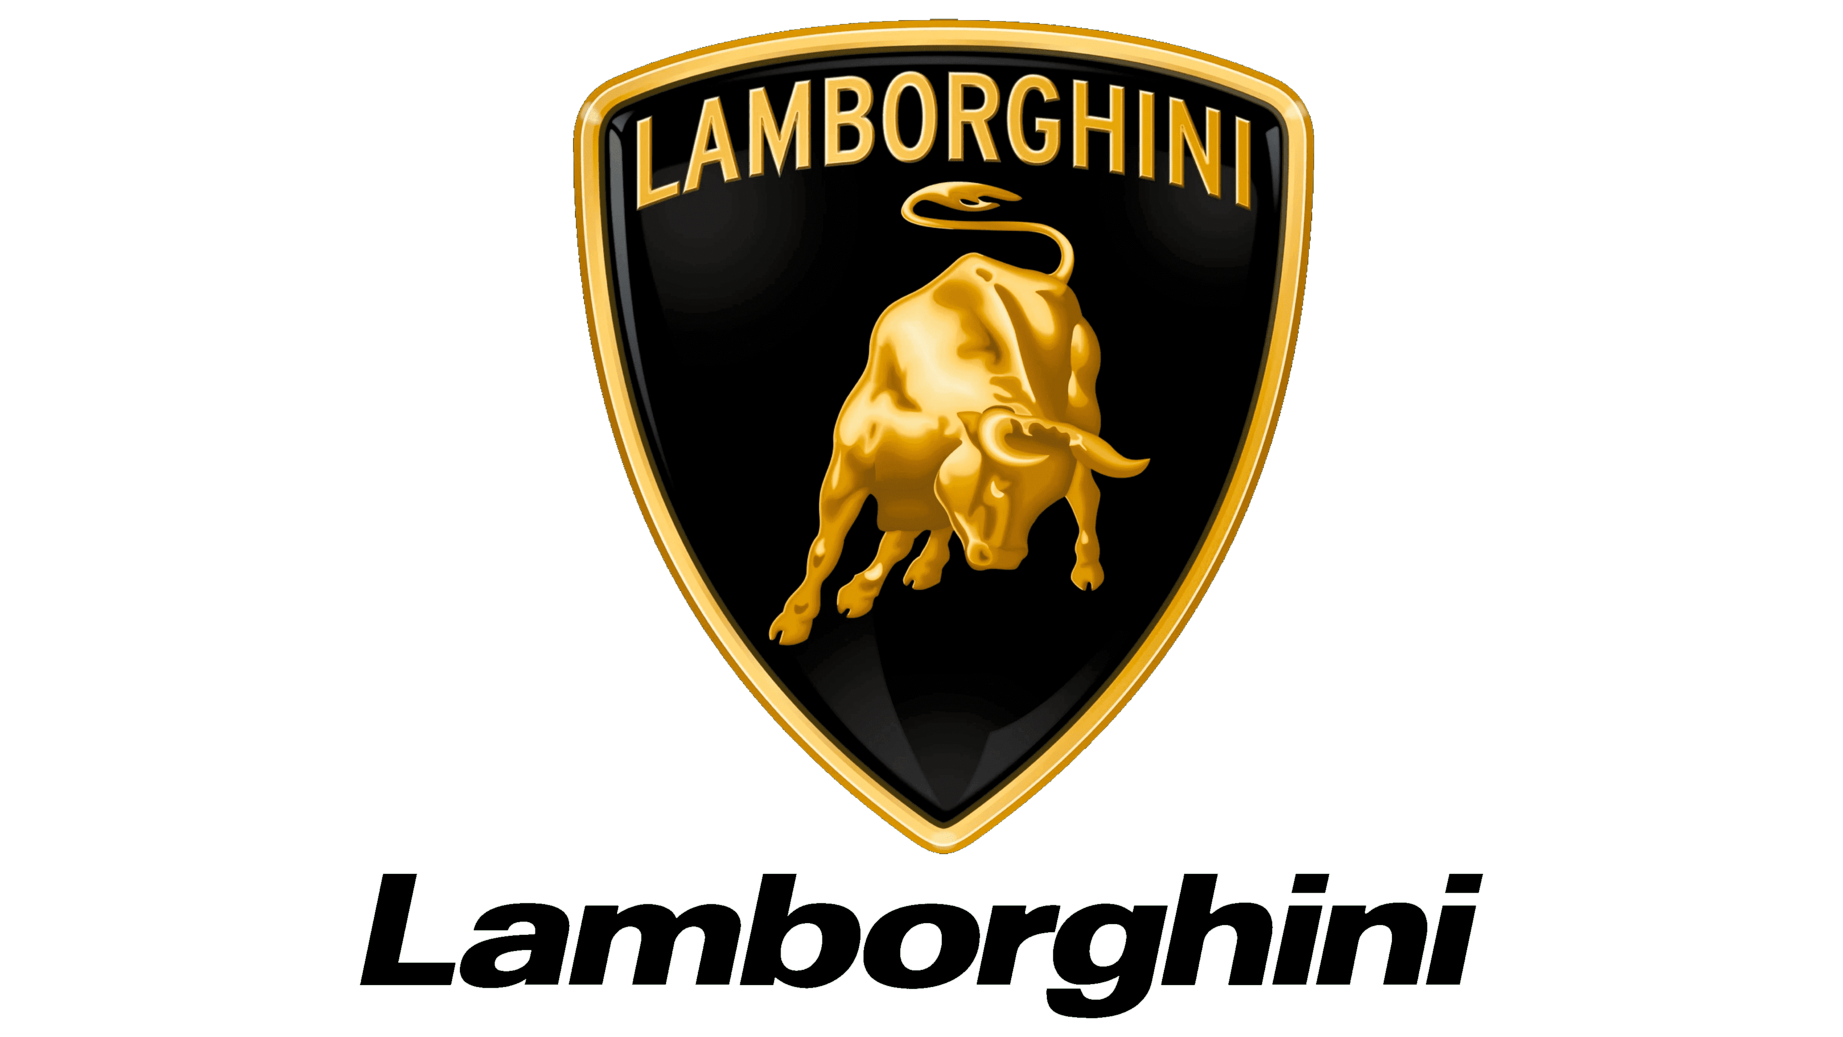 Lamborghini sign